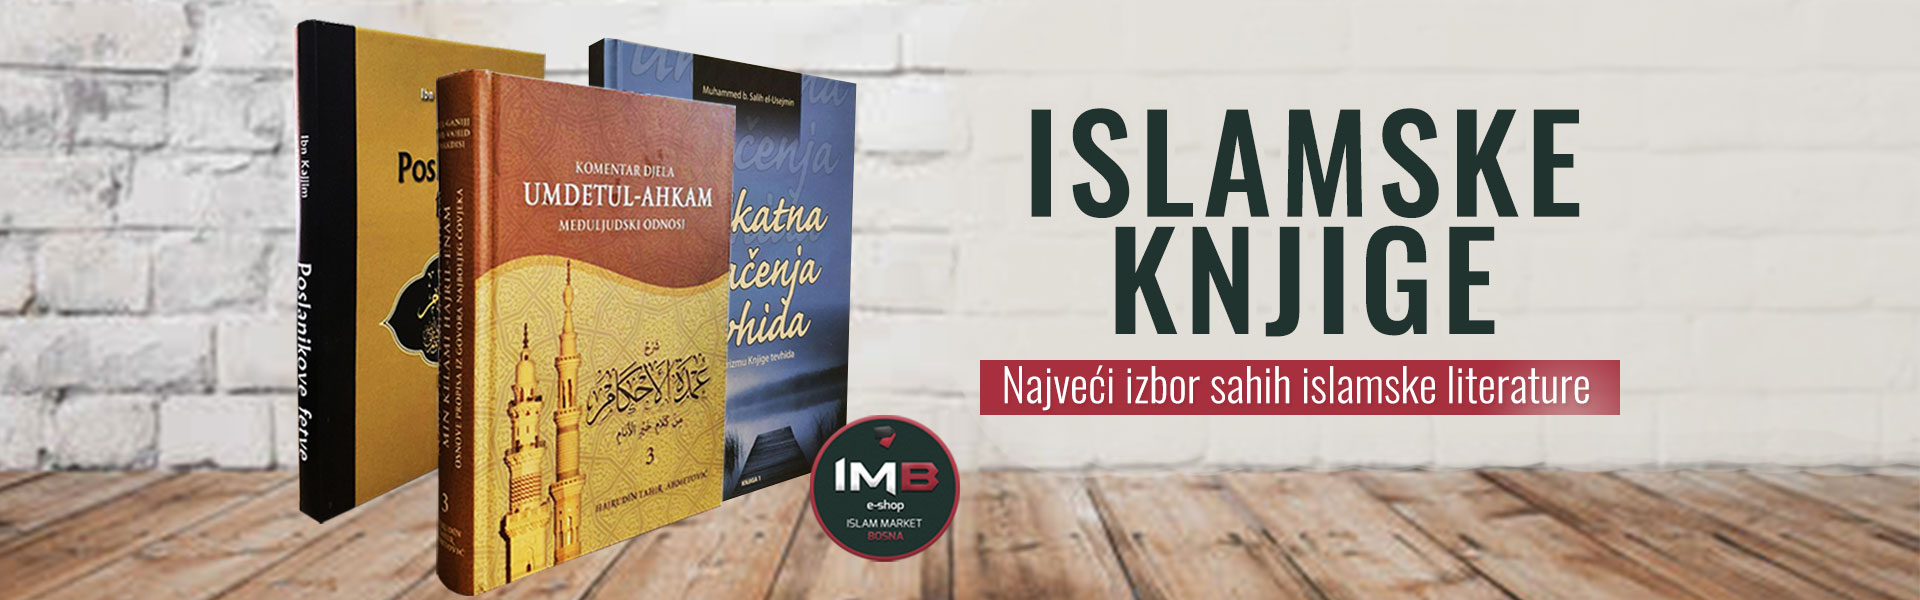 Banner IMBeshop islamske knjige1 - IMB eShop